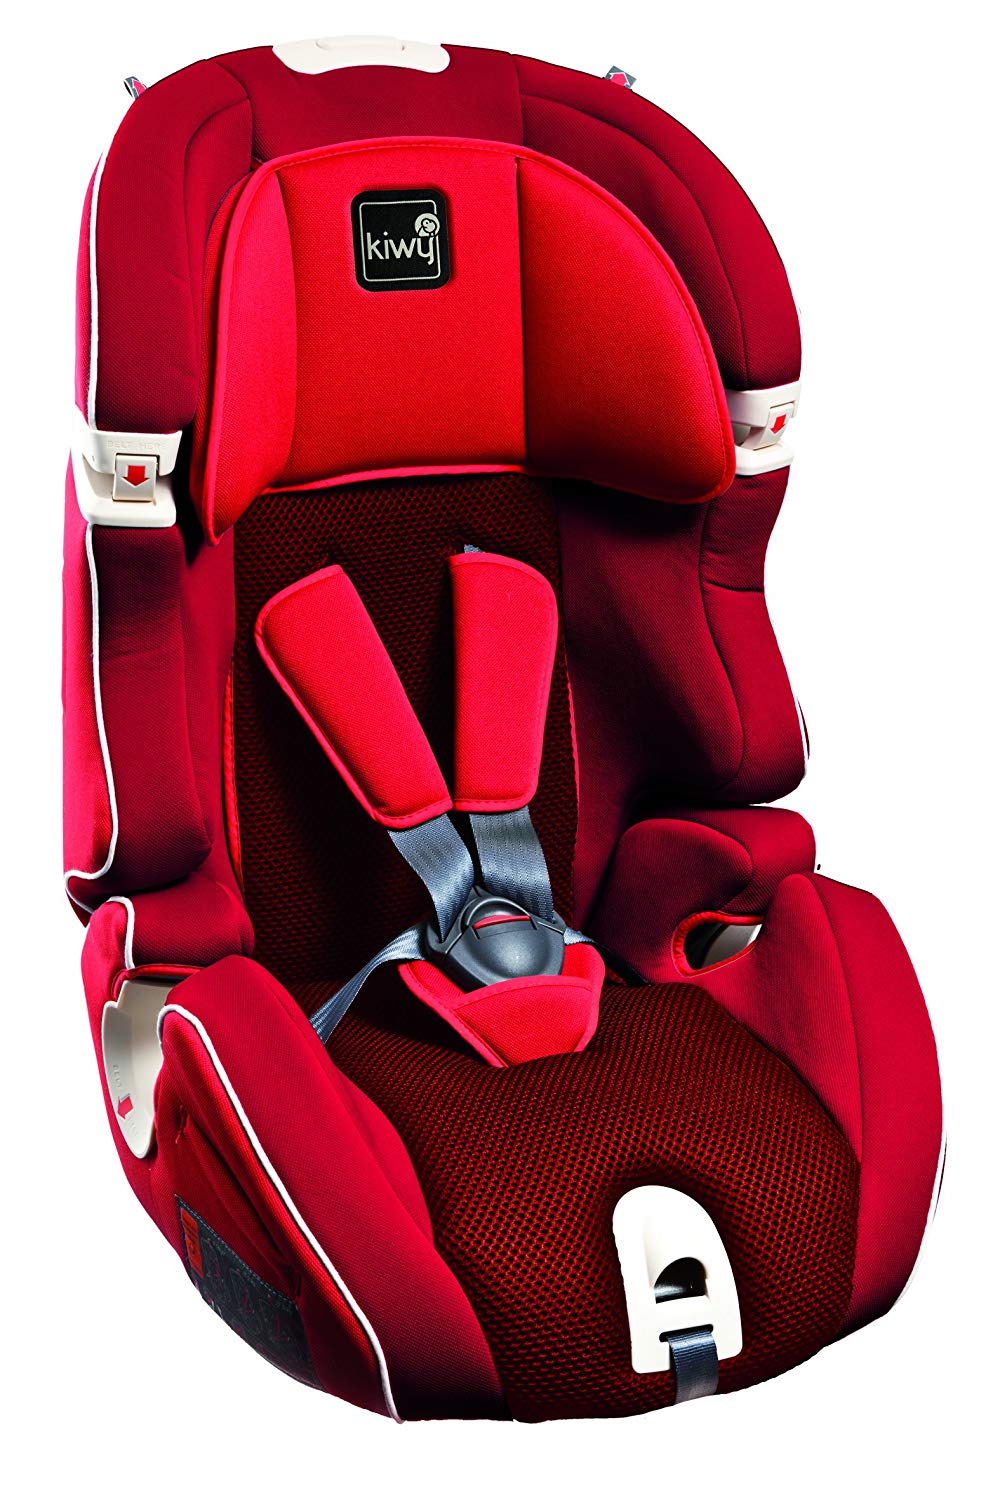 Kiwy Universal S123 13123KW02B Child Car Seat Group 1/2/3 9-36 kg, ECE R44/04 Cherry Red